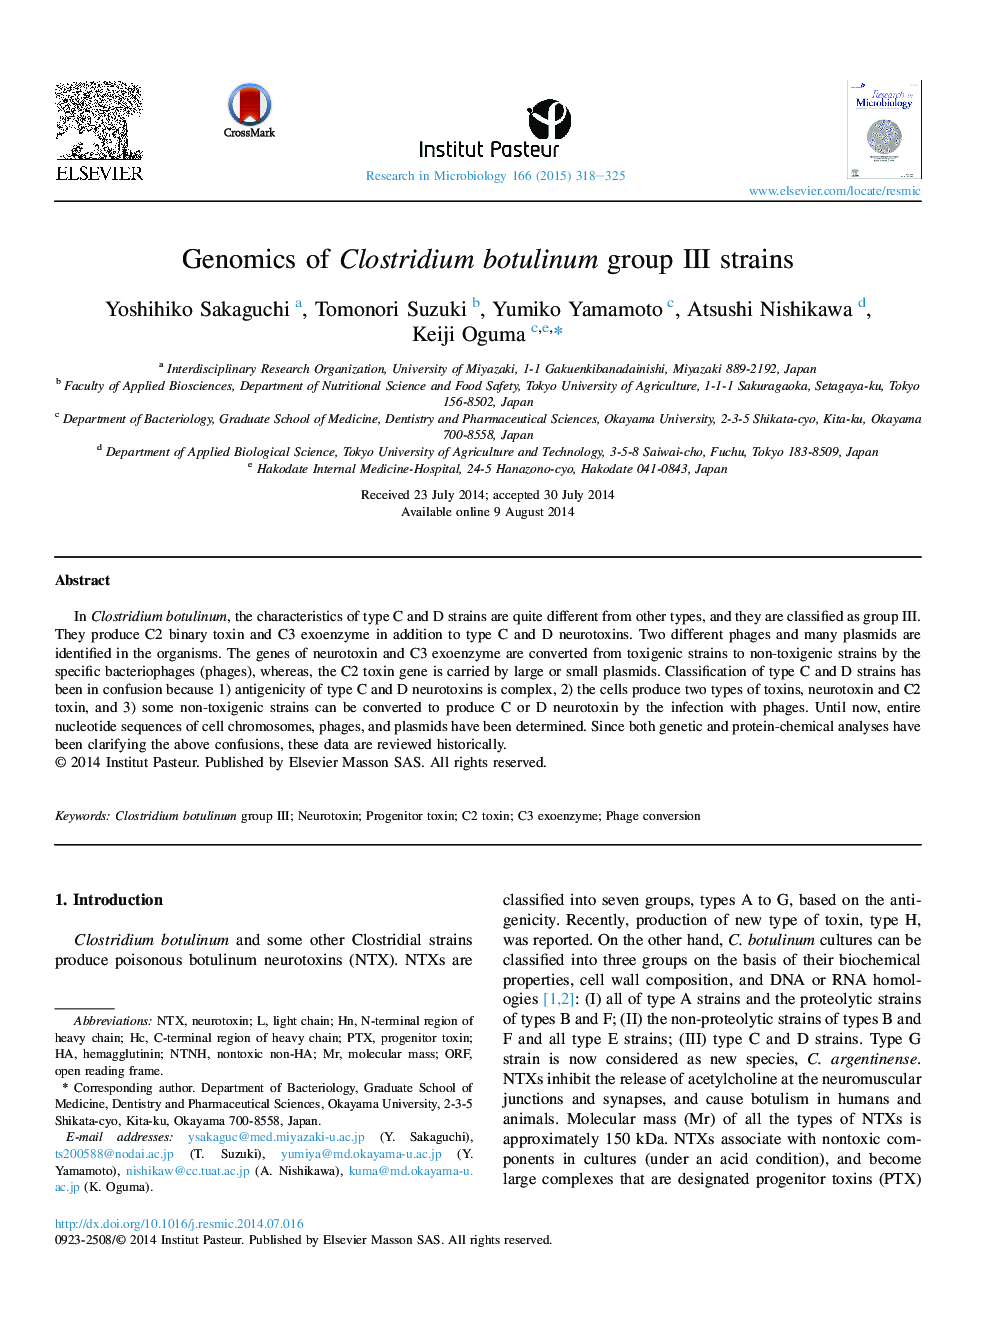 Genomics of Clostridium botulinum group III strains